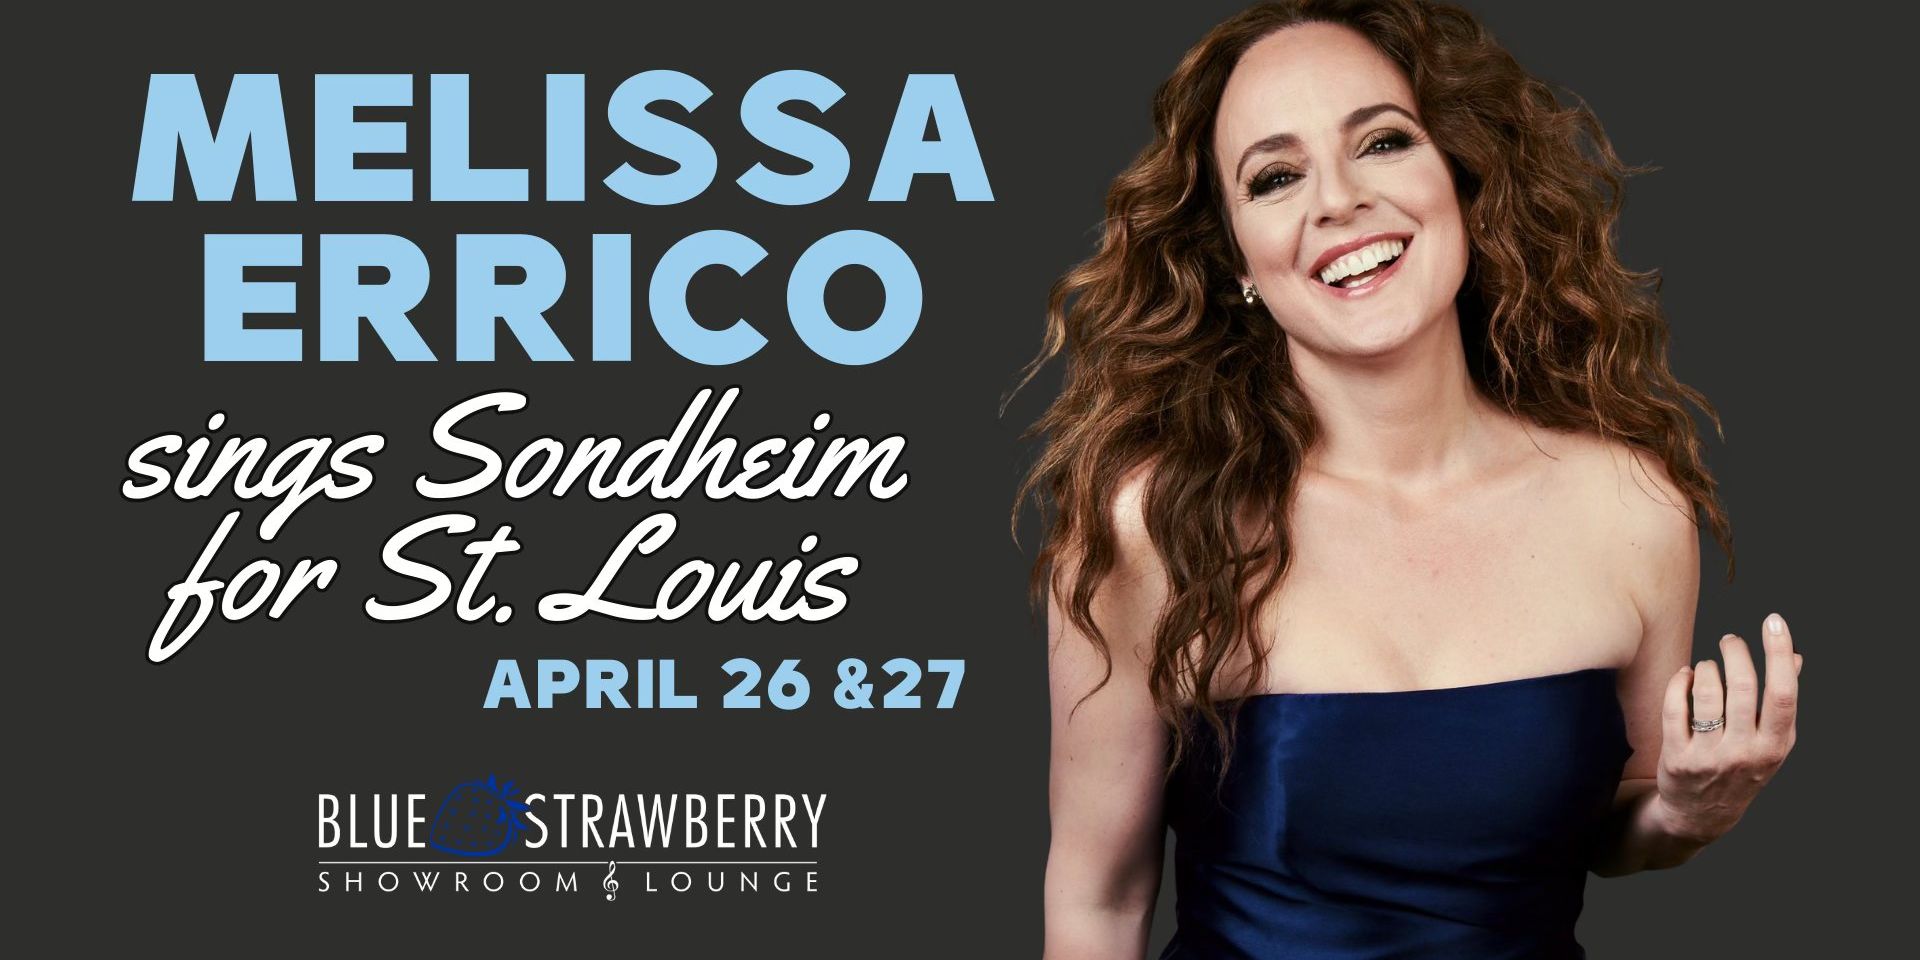 Melissa Errico: Sings Sondheim for St. Louis promotional image